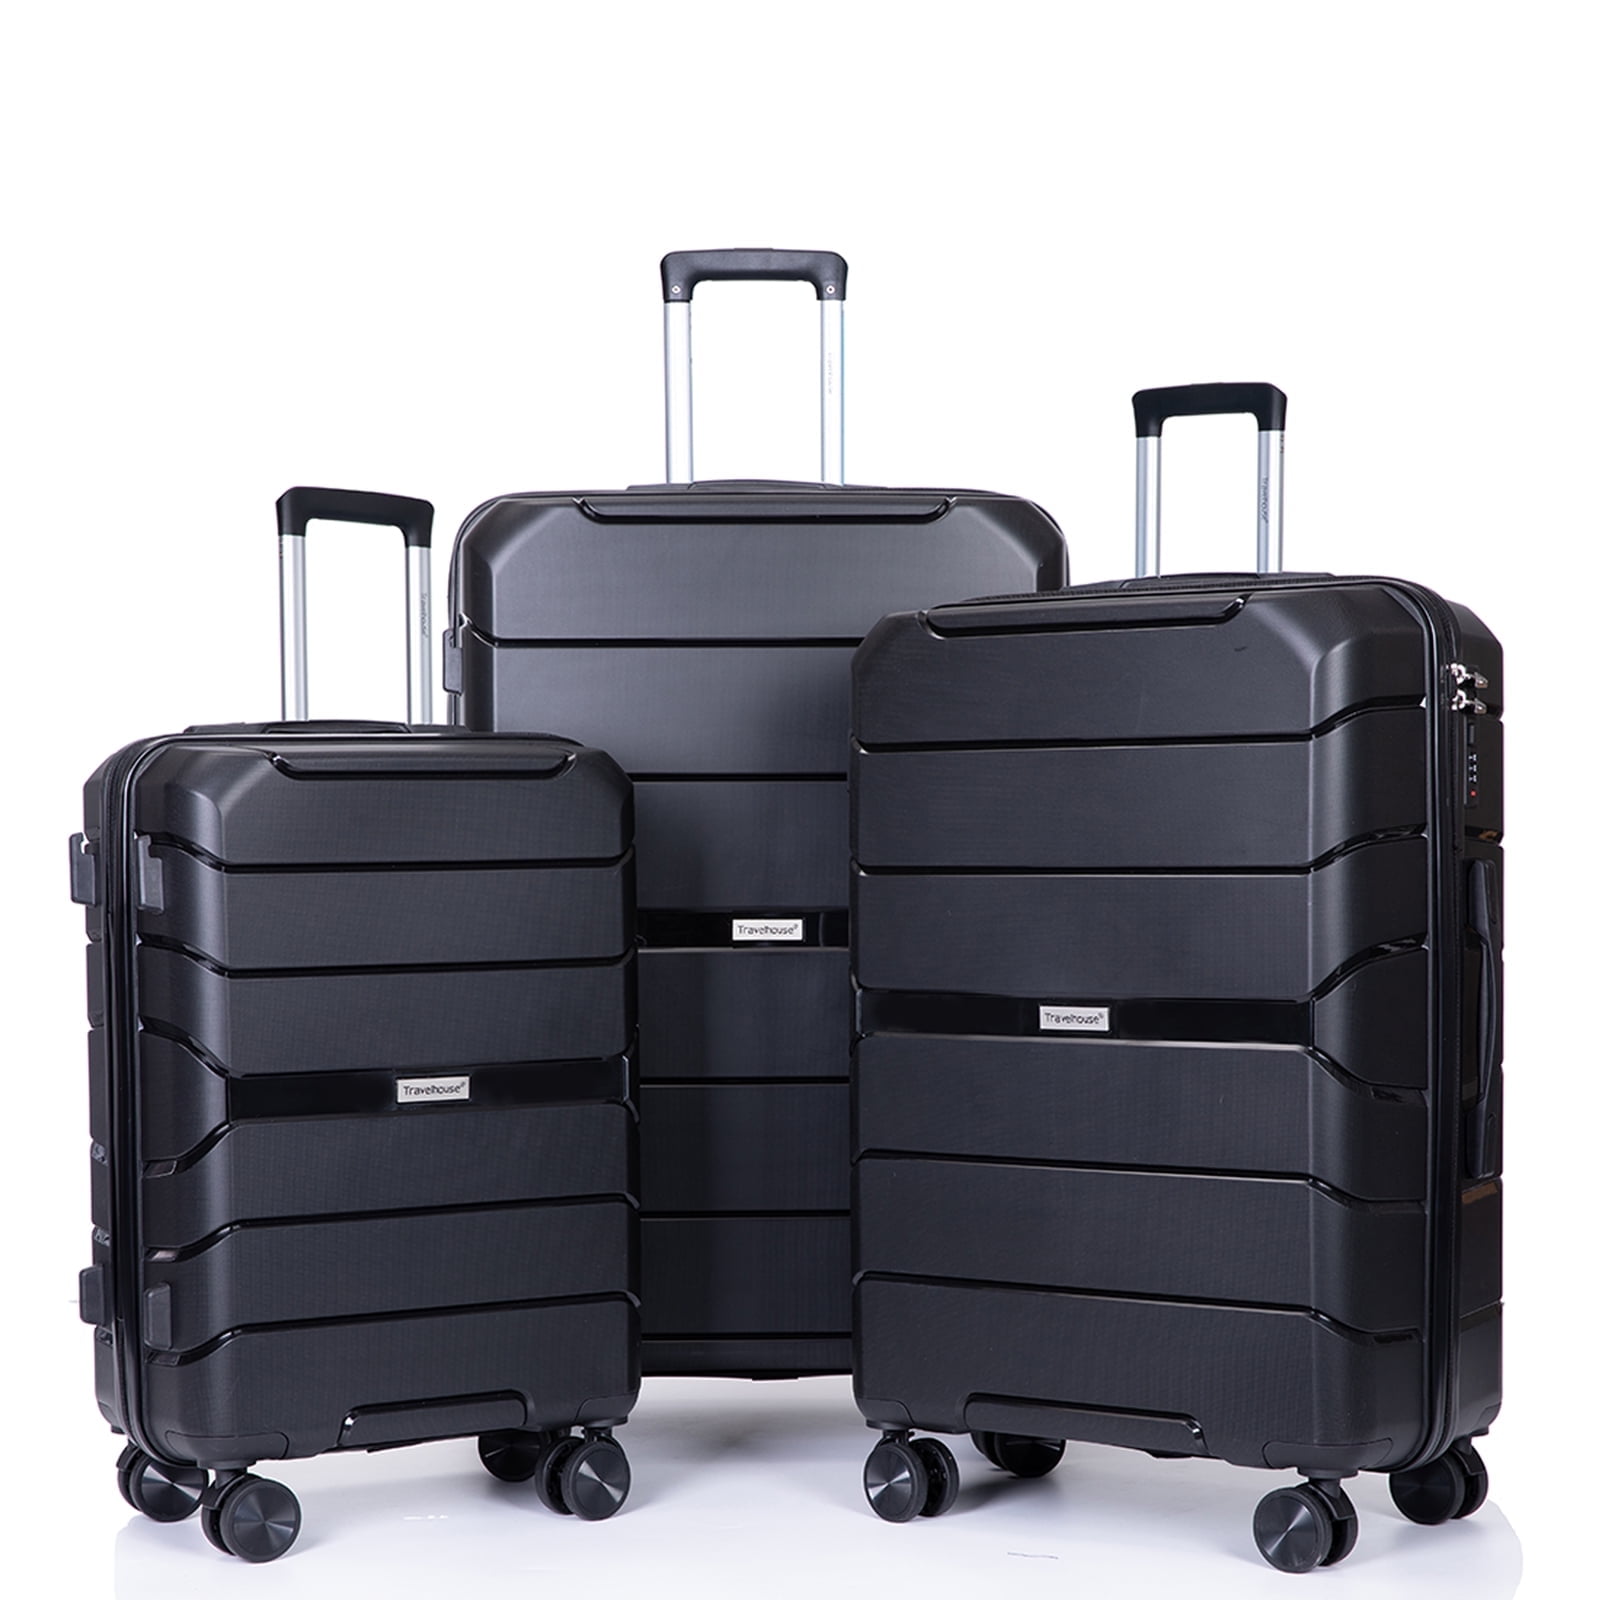 Travelhouse 3 Piece Hardshell Lightweight Luggage Set with TSA Lock